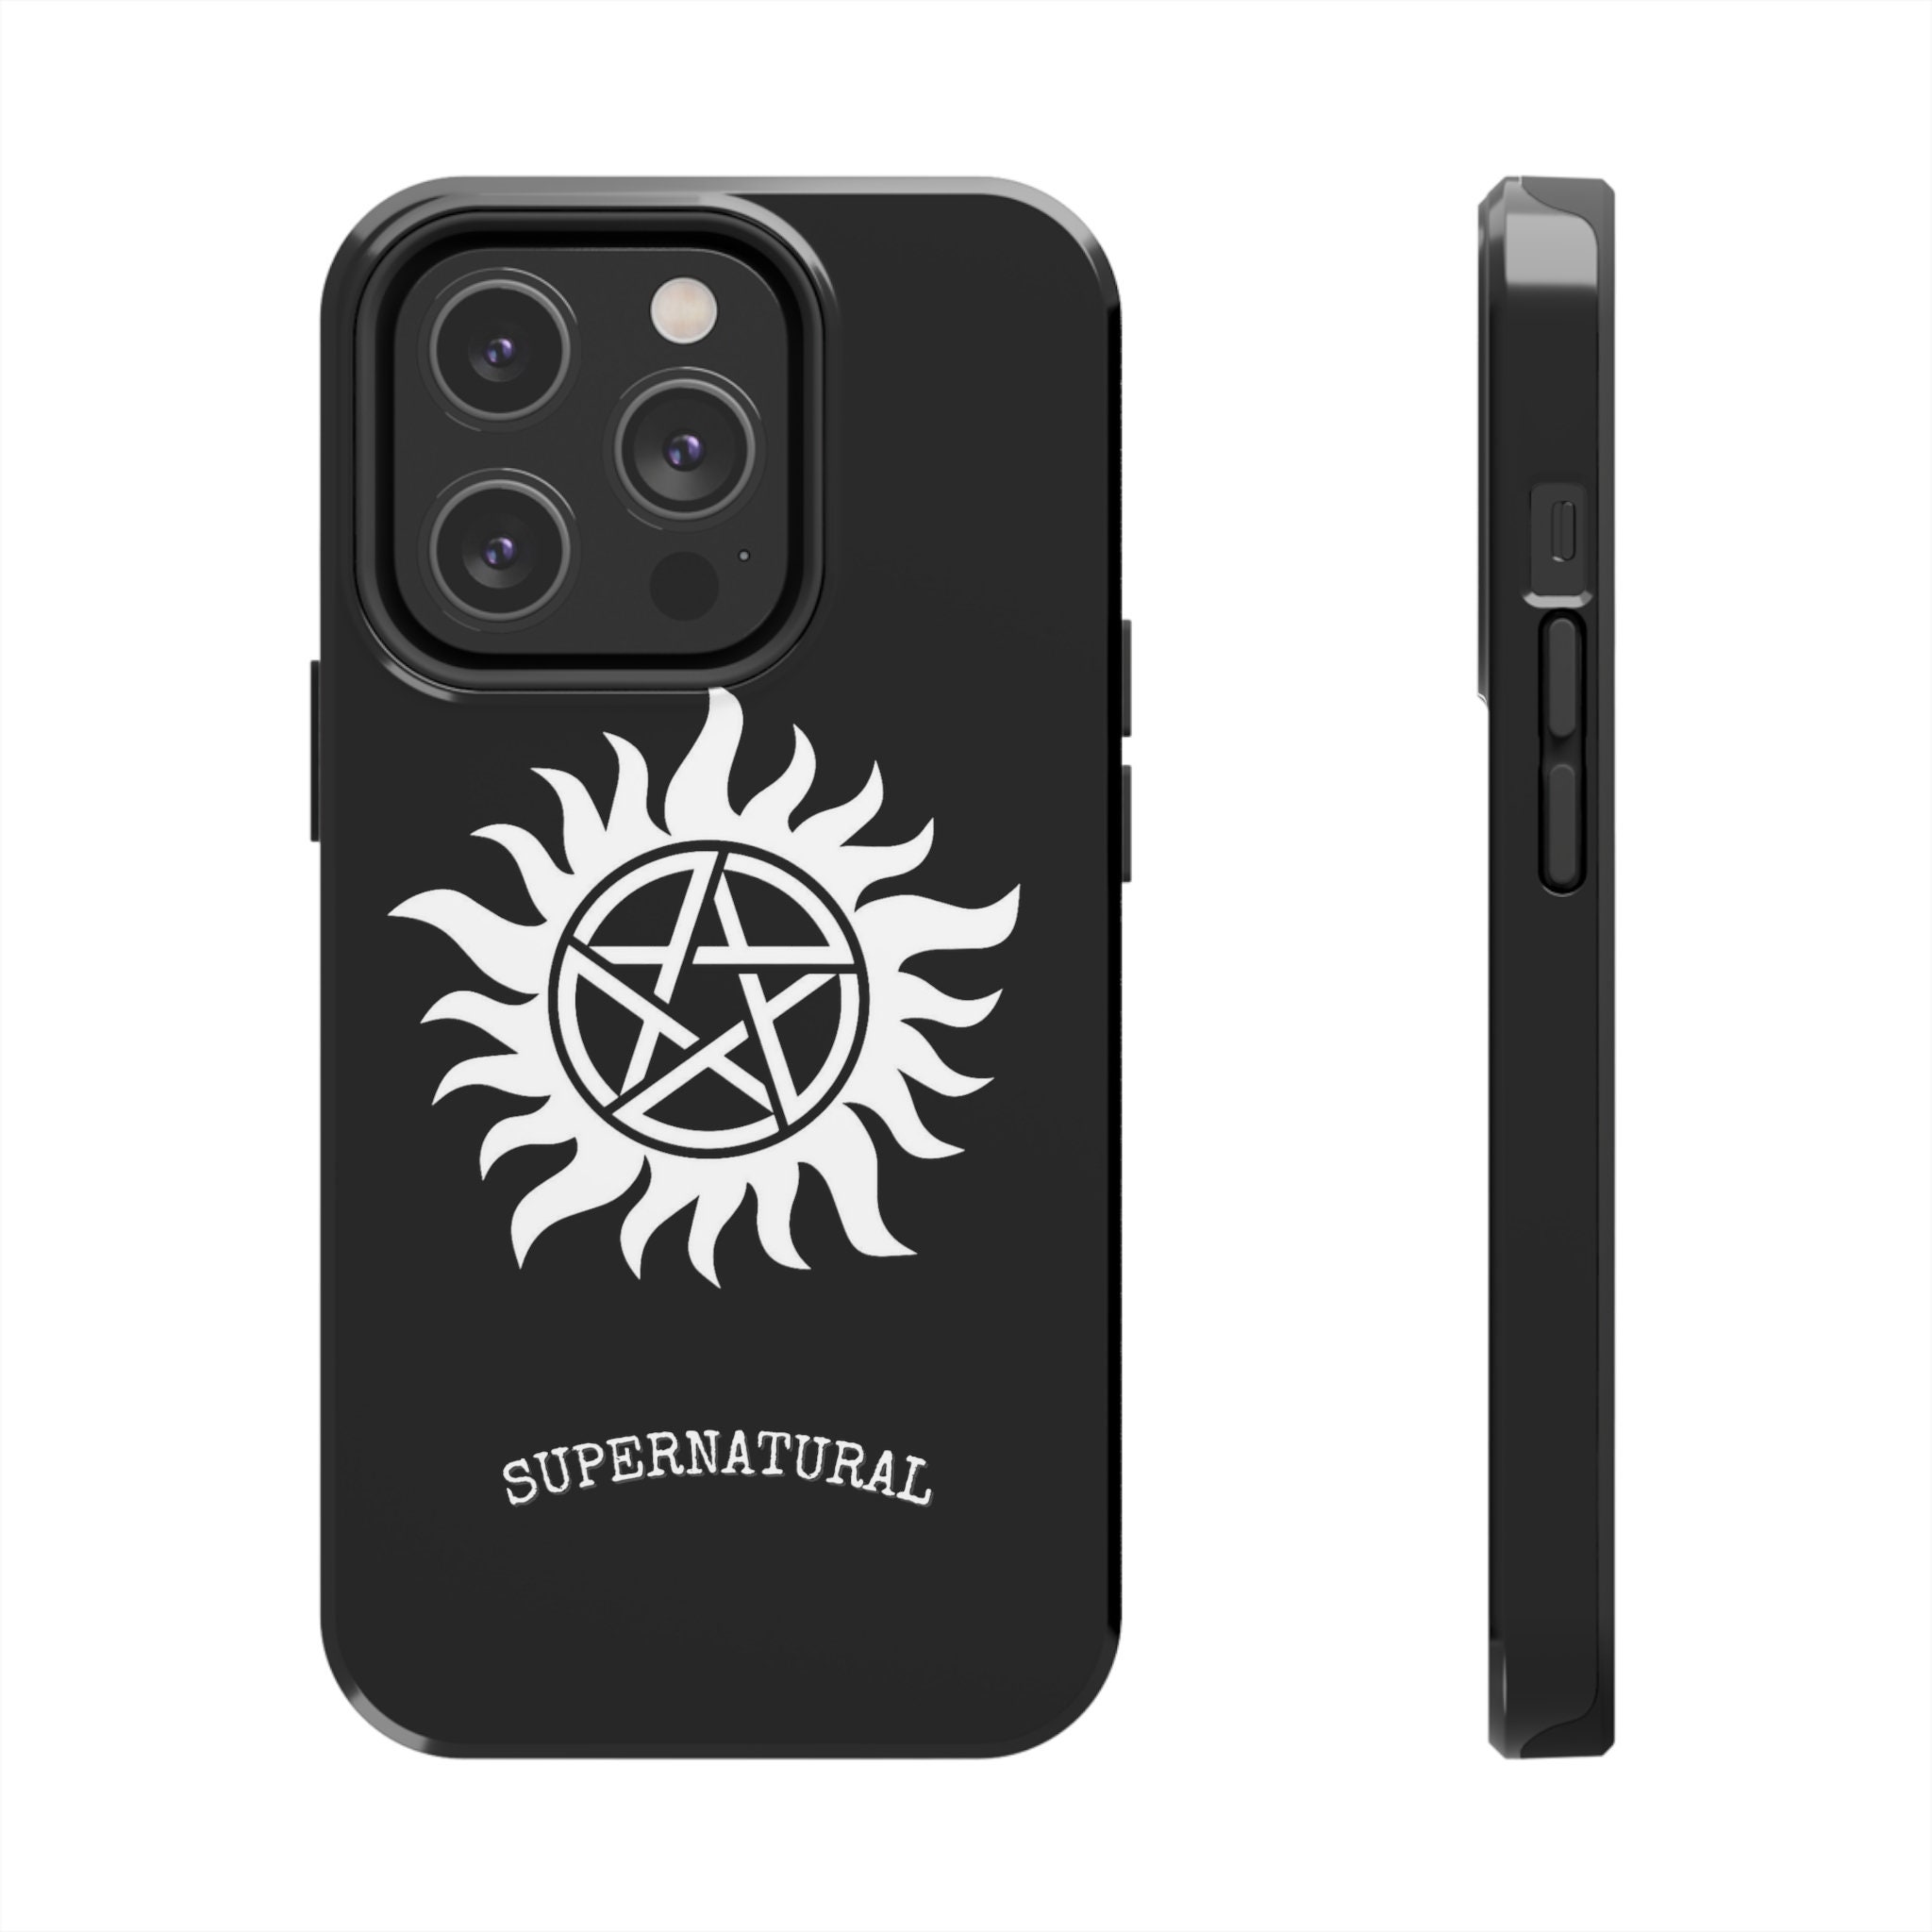 Supernatural Fan Merch Tough iPhone Cases